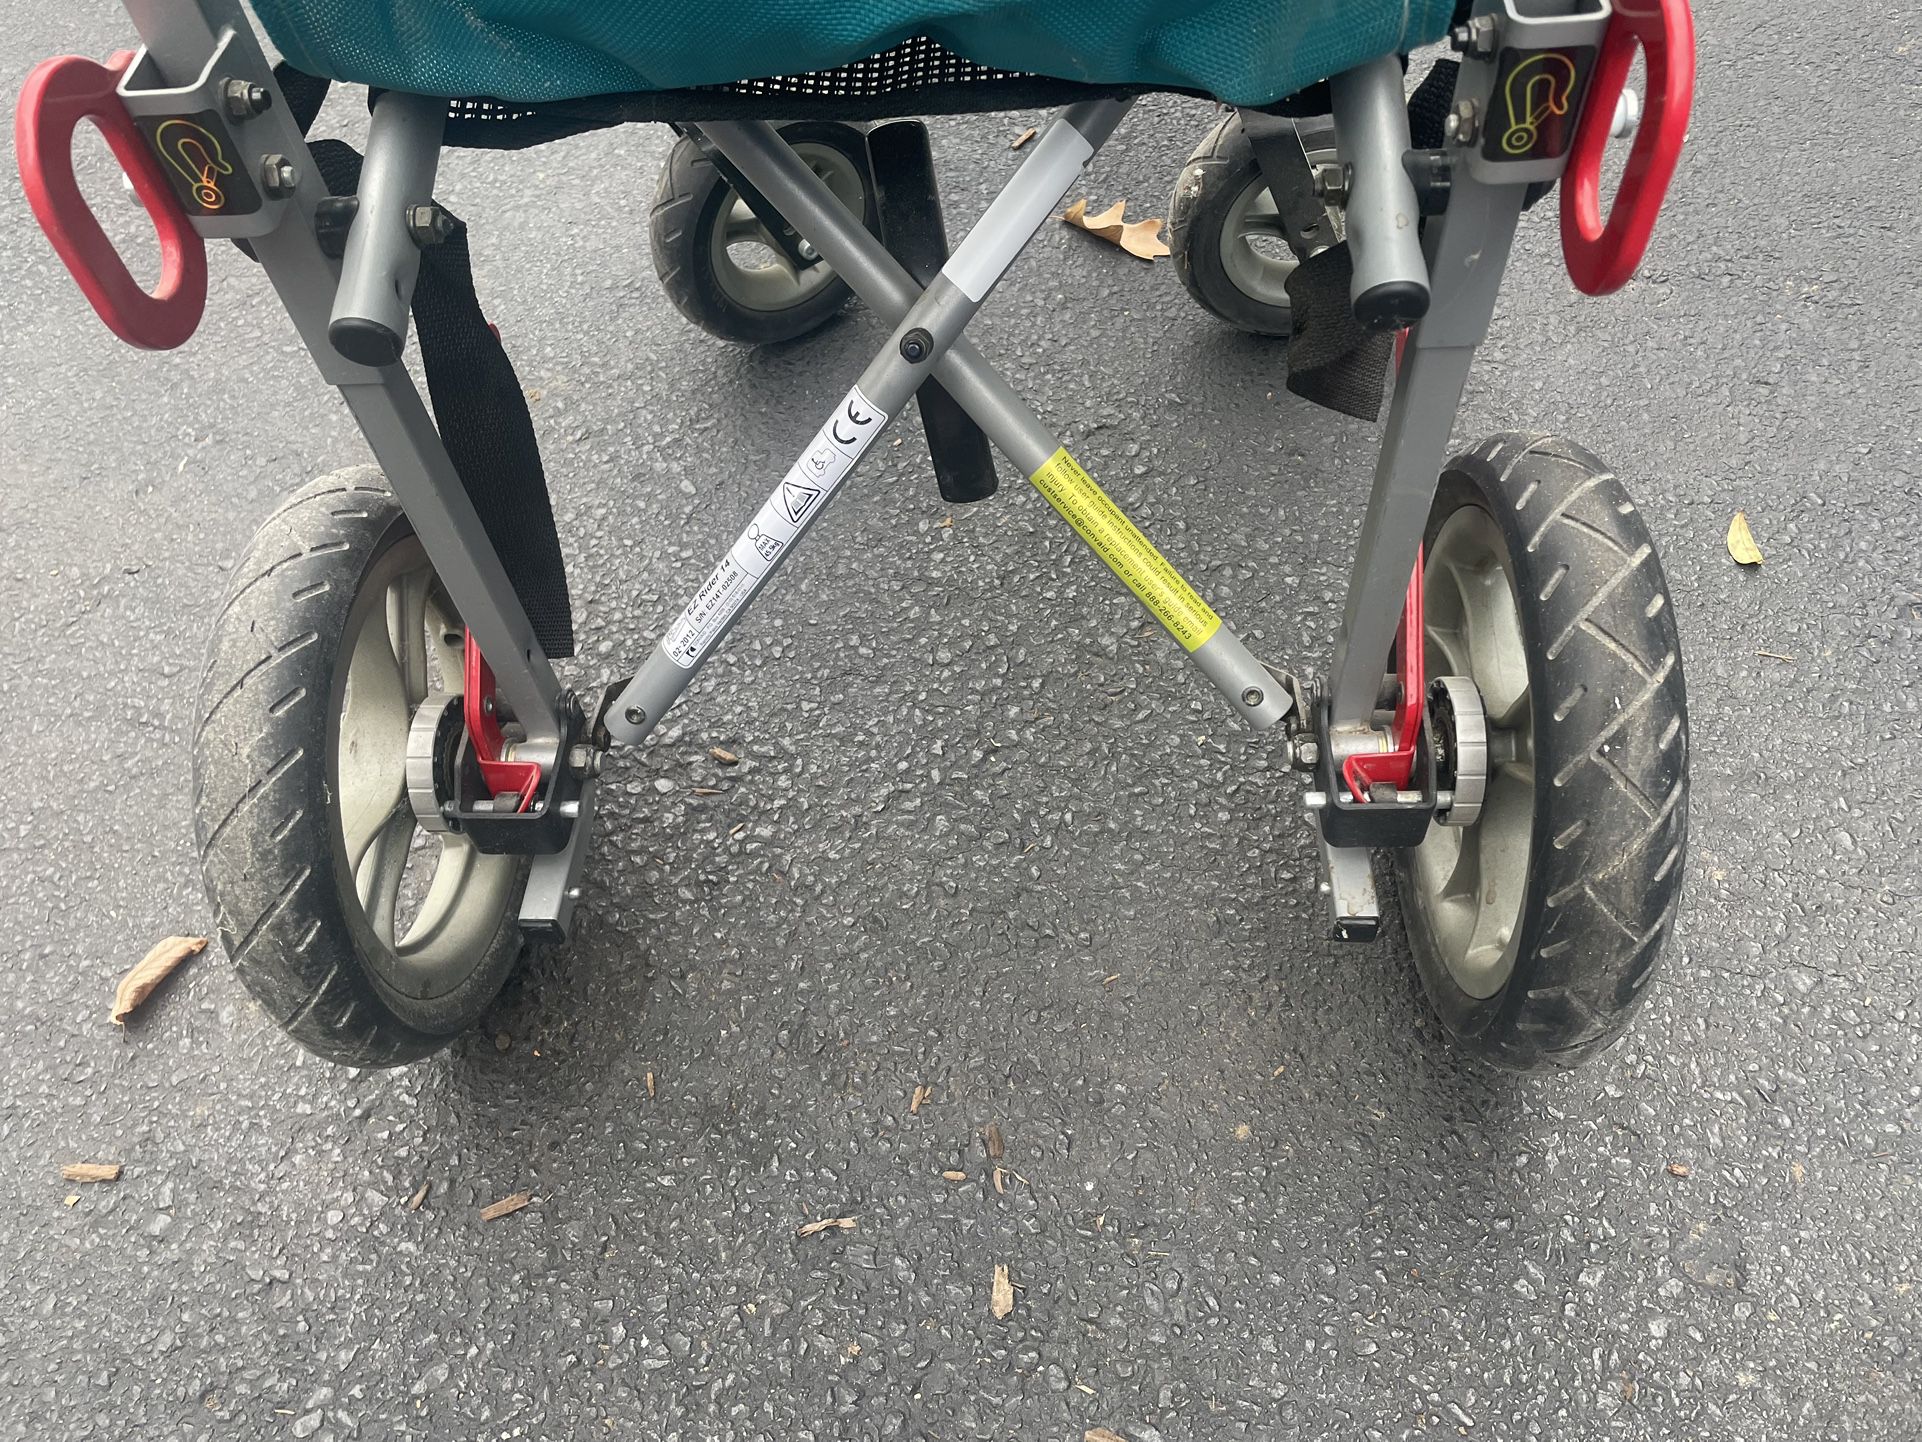 Convaid EZ Rider 14 Adaptive Stroller